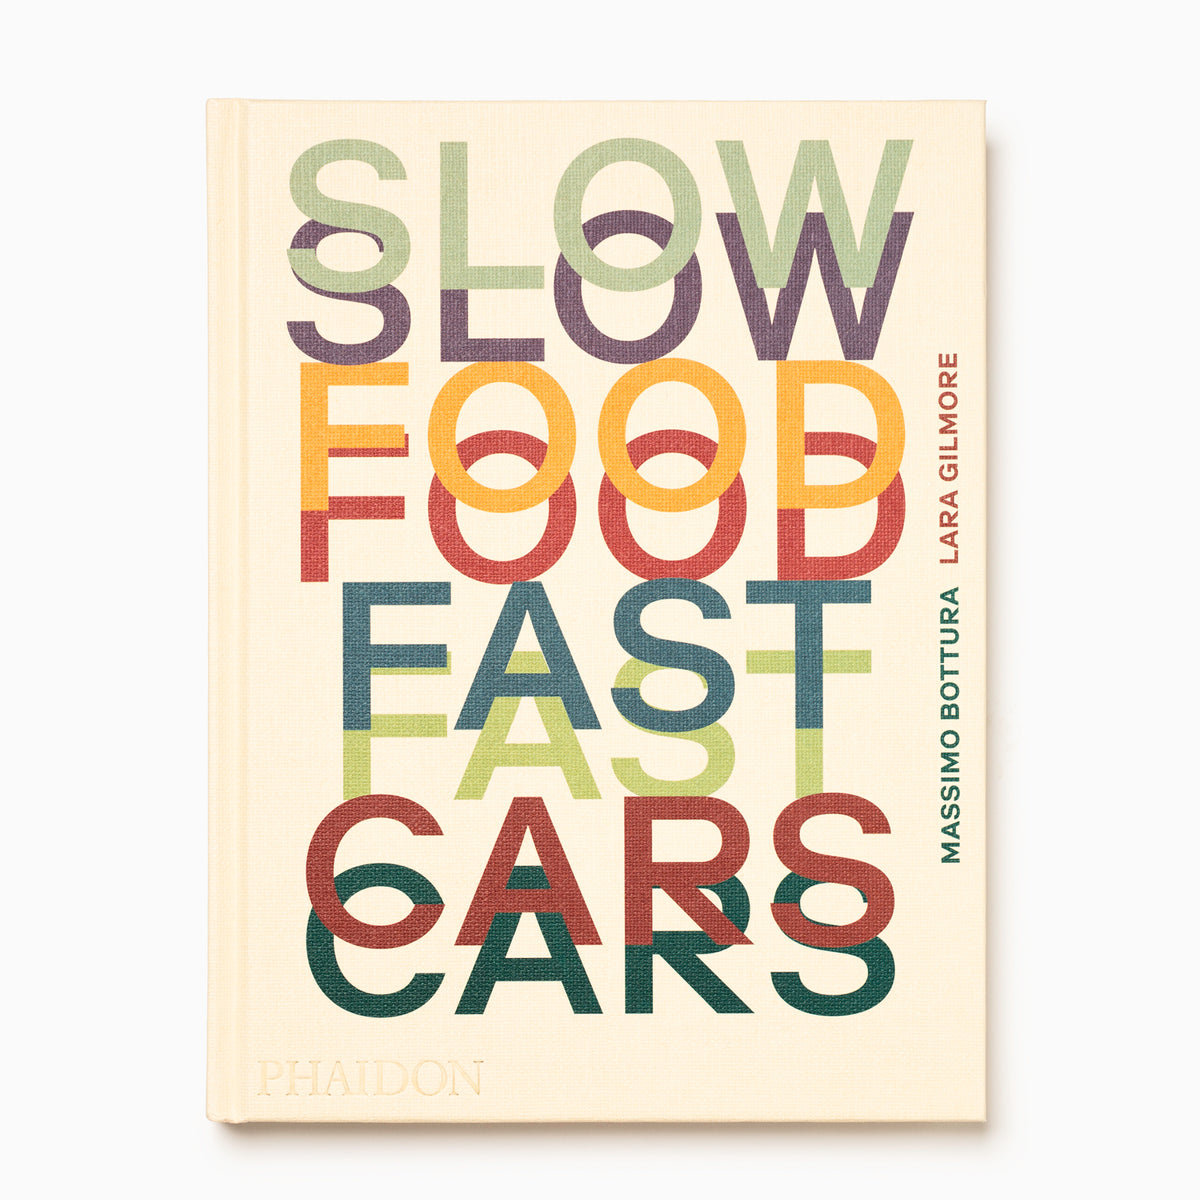 Slow Food, Fast Cars